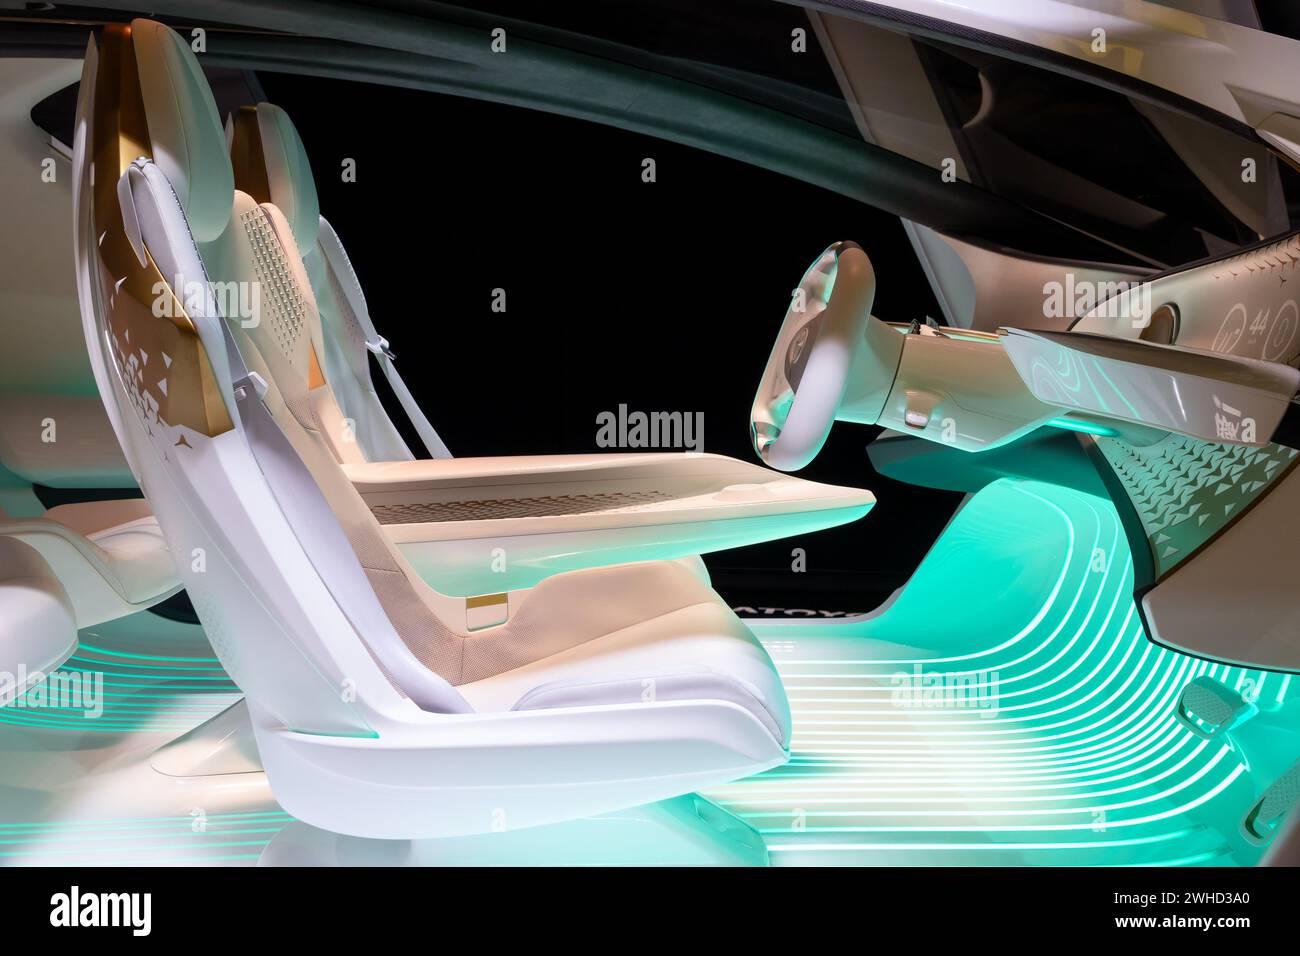 Toyota Concept i-Series autonomous electric car at the 88th Geneva International Motor Show. Switzerland - March 6, 2018 Stock Photo